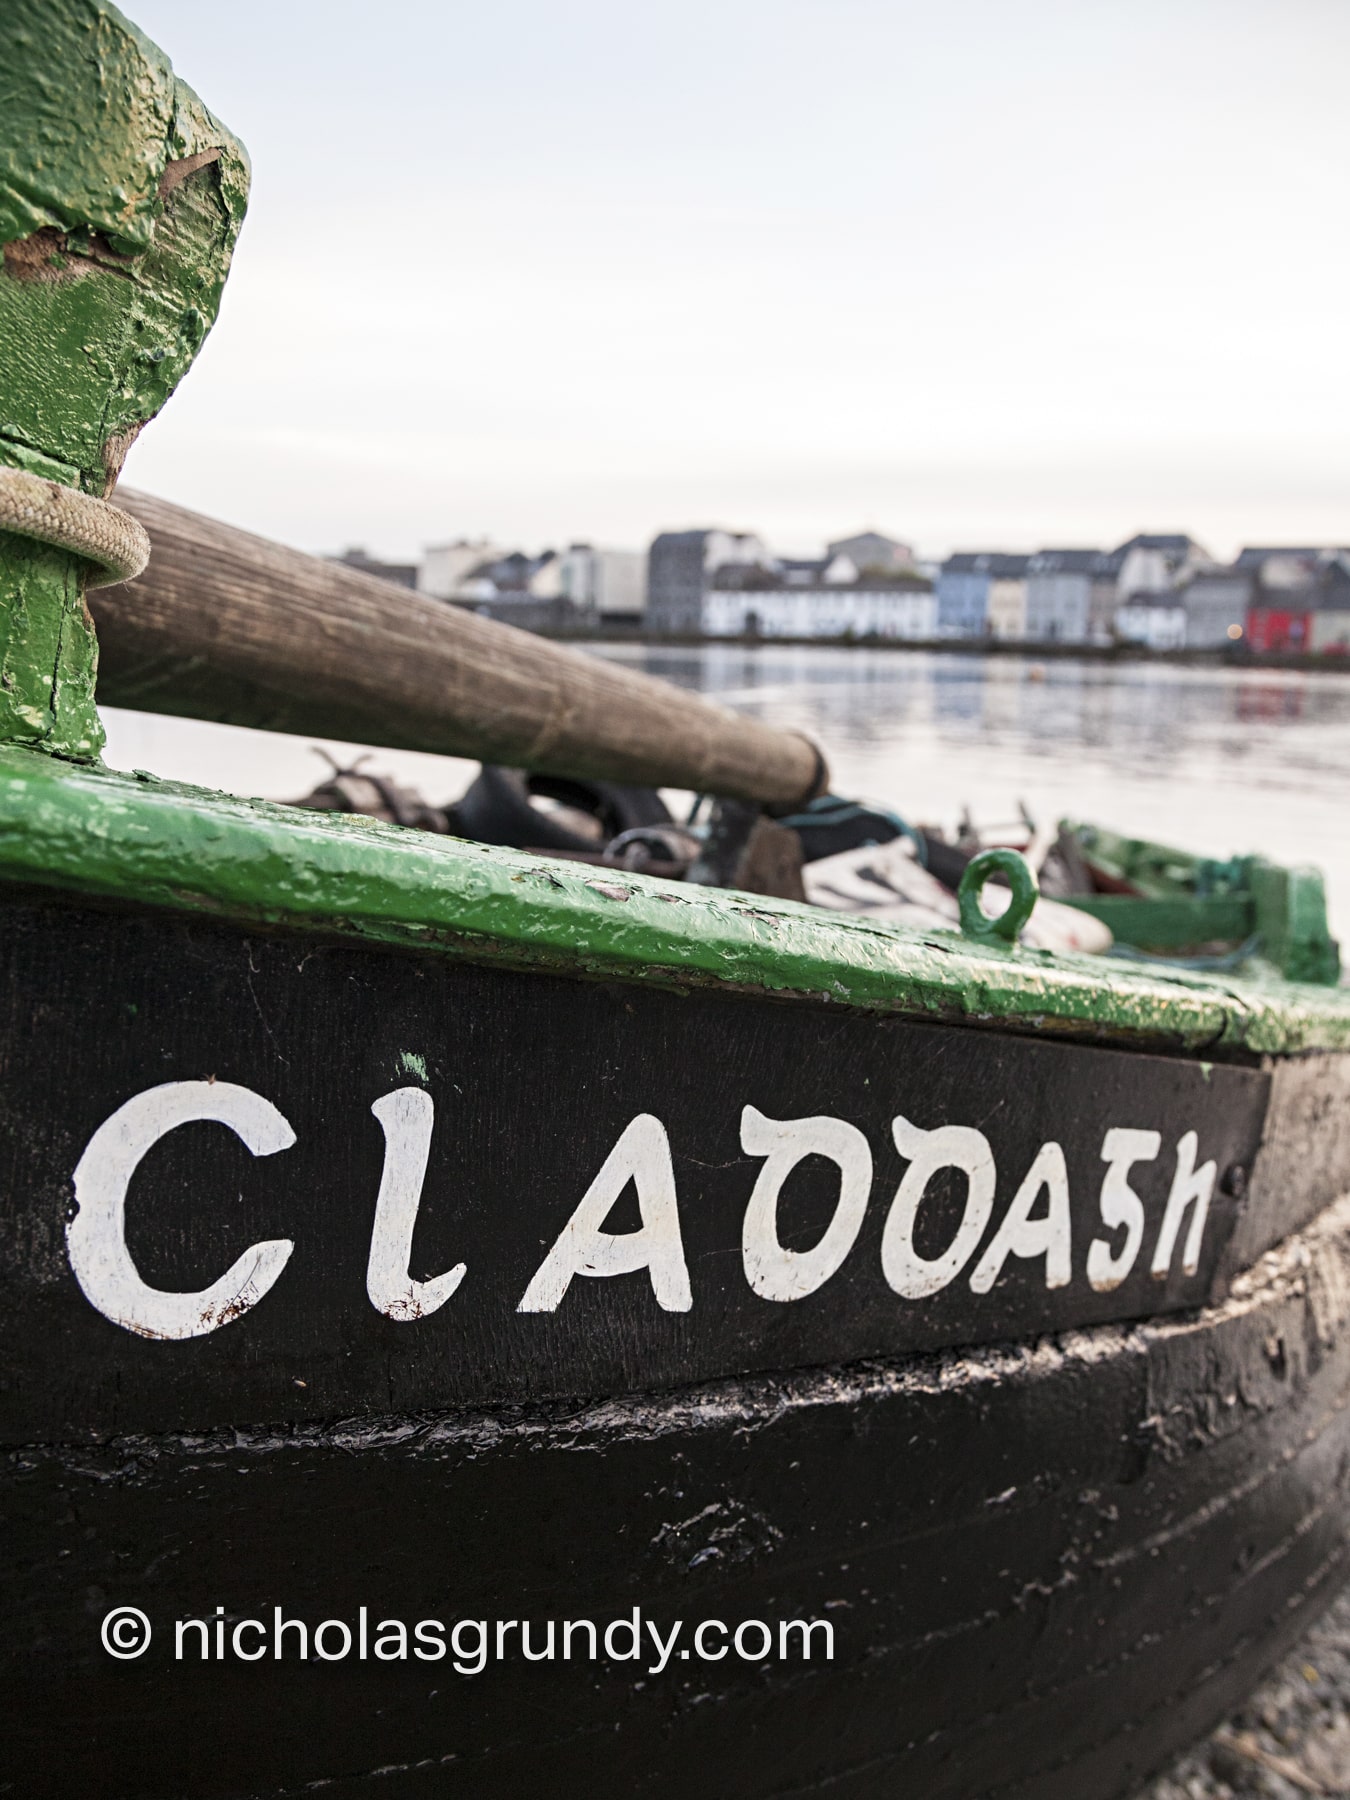 Claddagh Photo Boat Galway